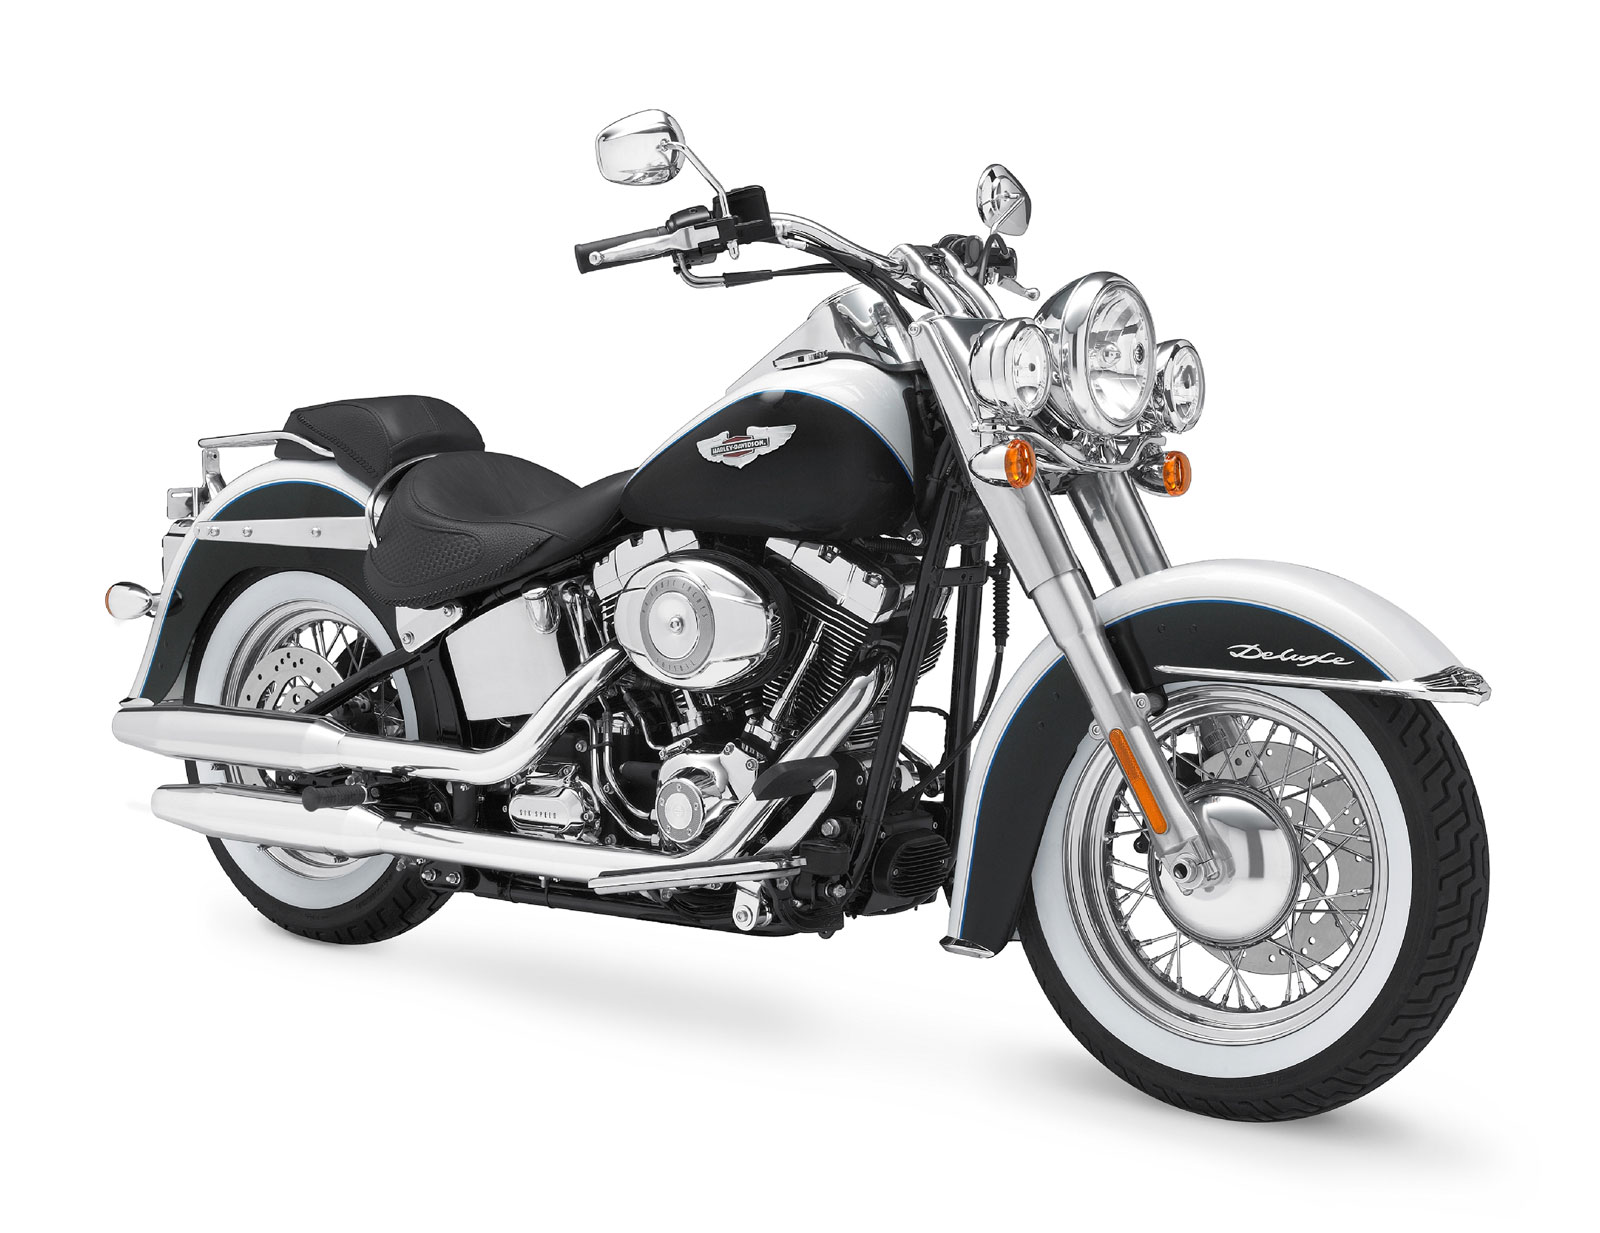 Kumpulan Gambar MOGE Harley Davidson Terbaru Indonesia Otomotif